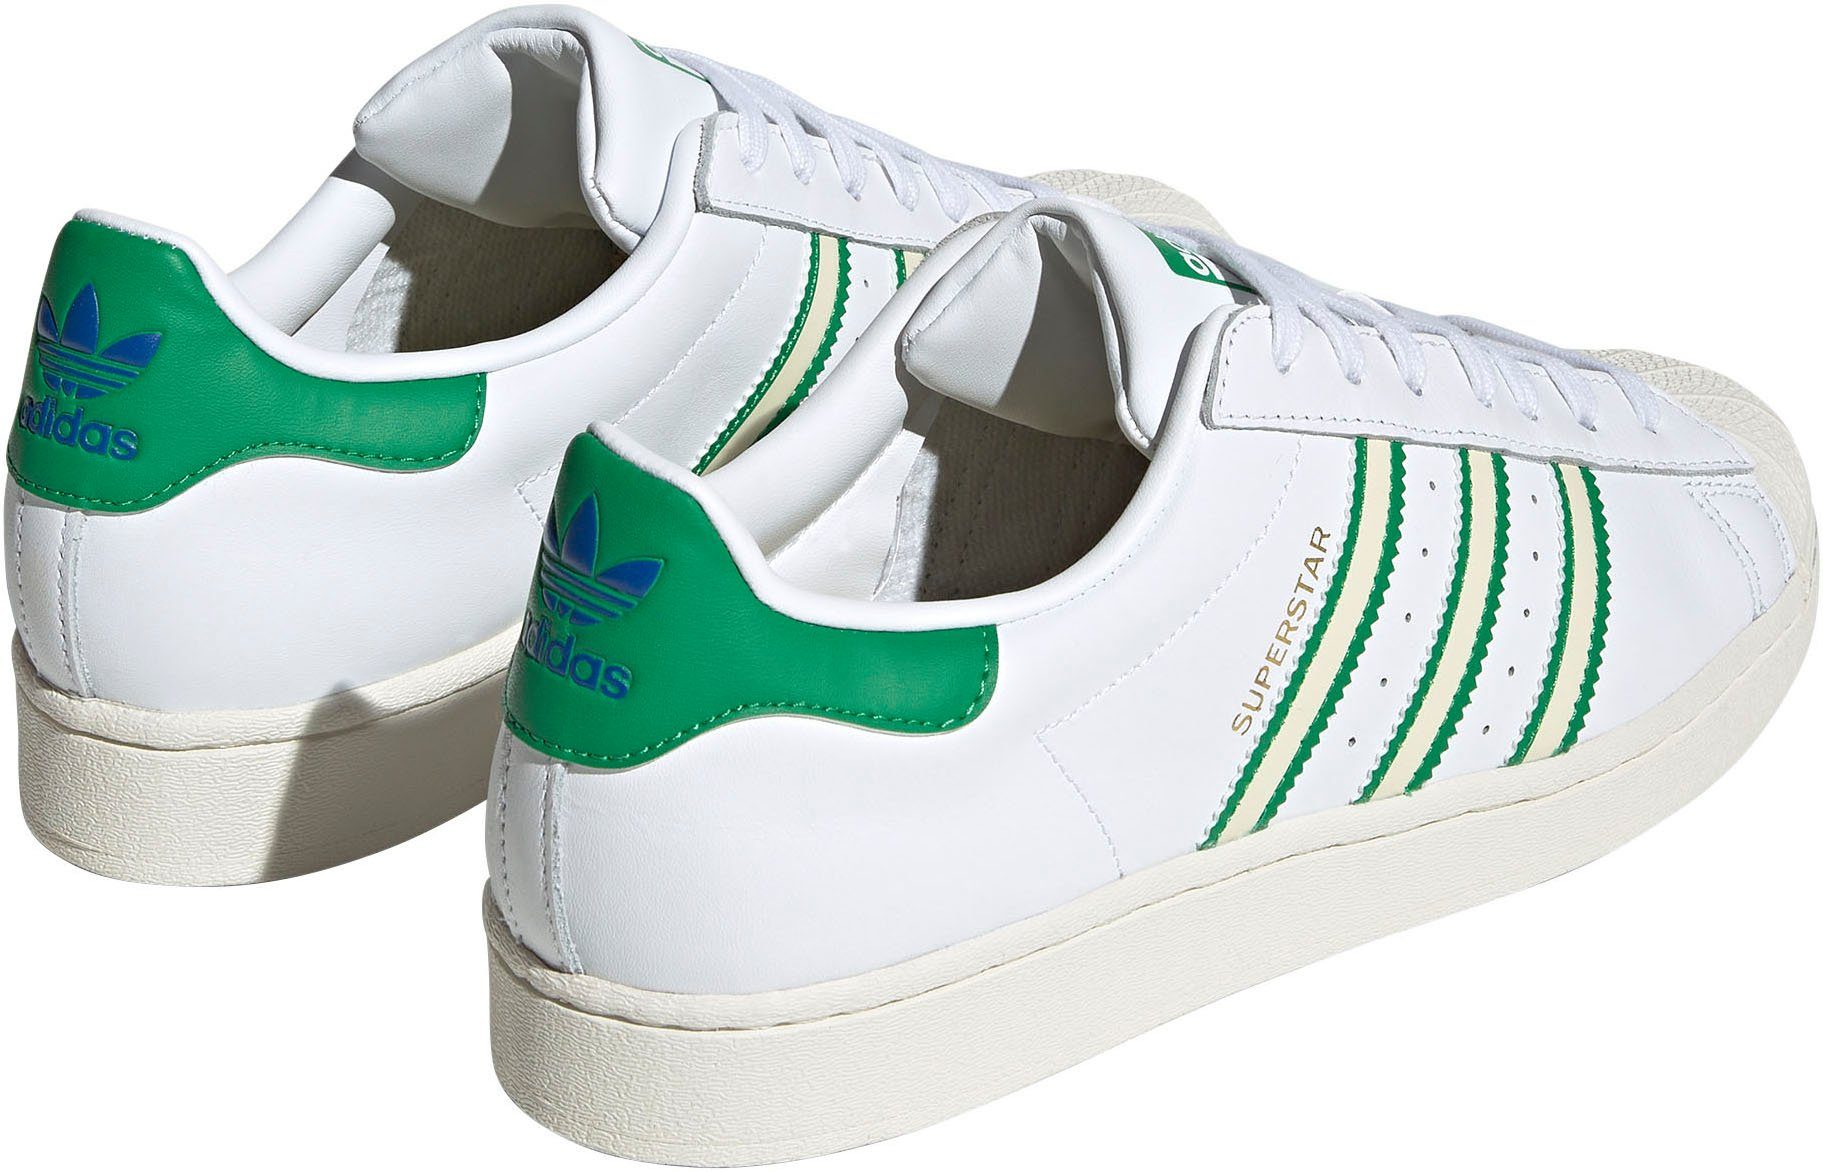 Sneaker Originals SUPERSTAR adidas weiß-grün